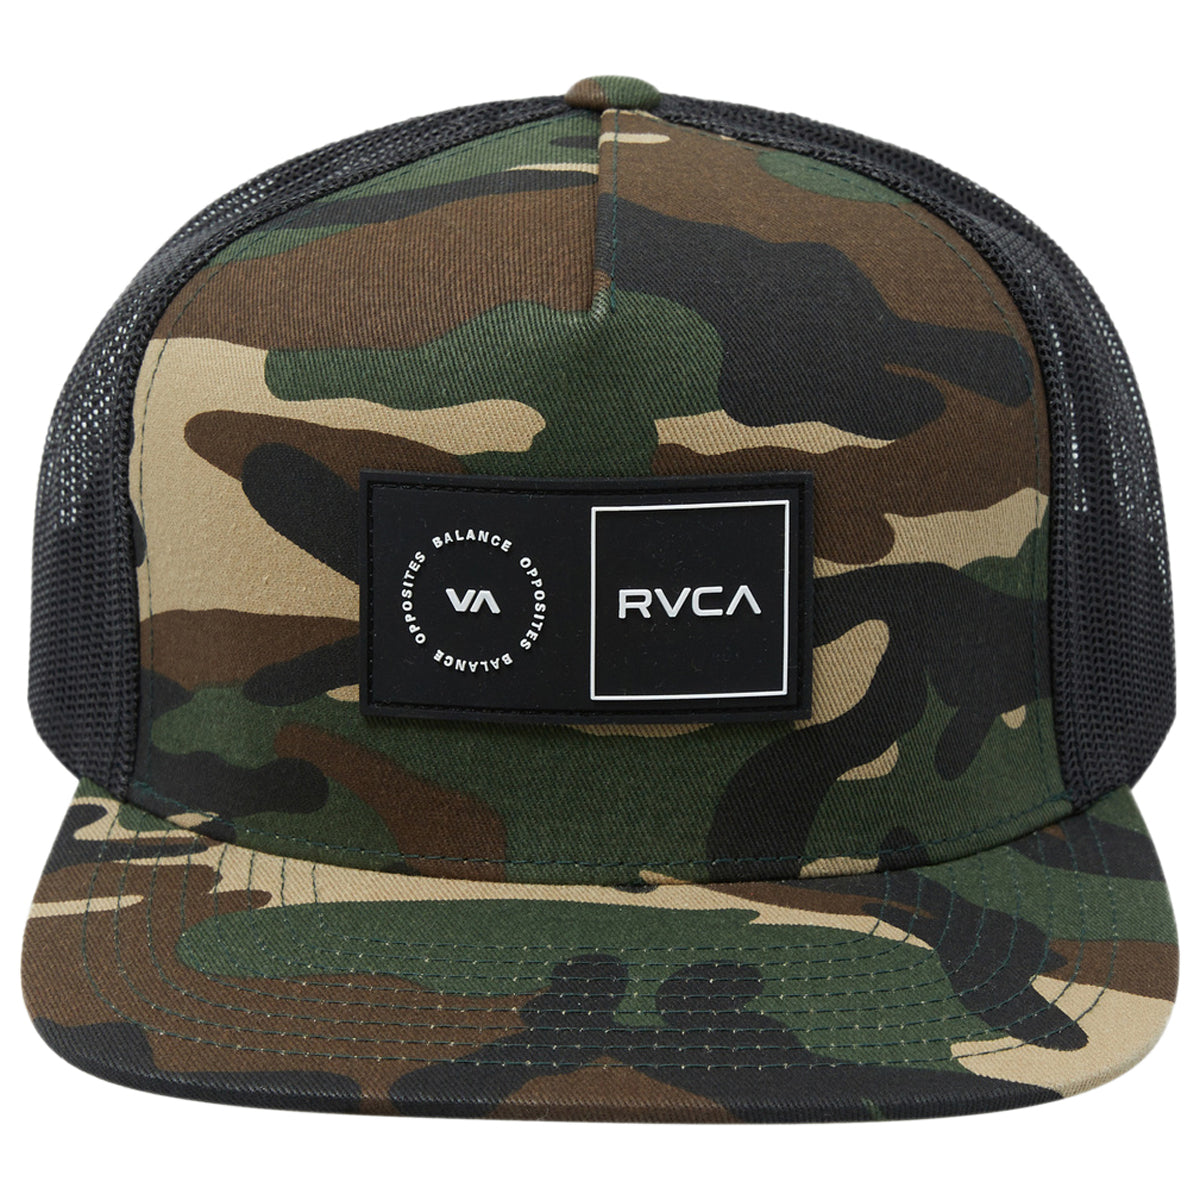 RVCA Platform Trucker Hat - Camo image 3